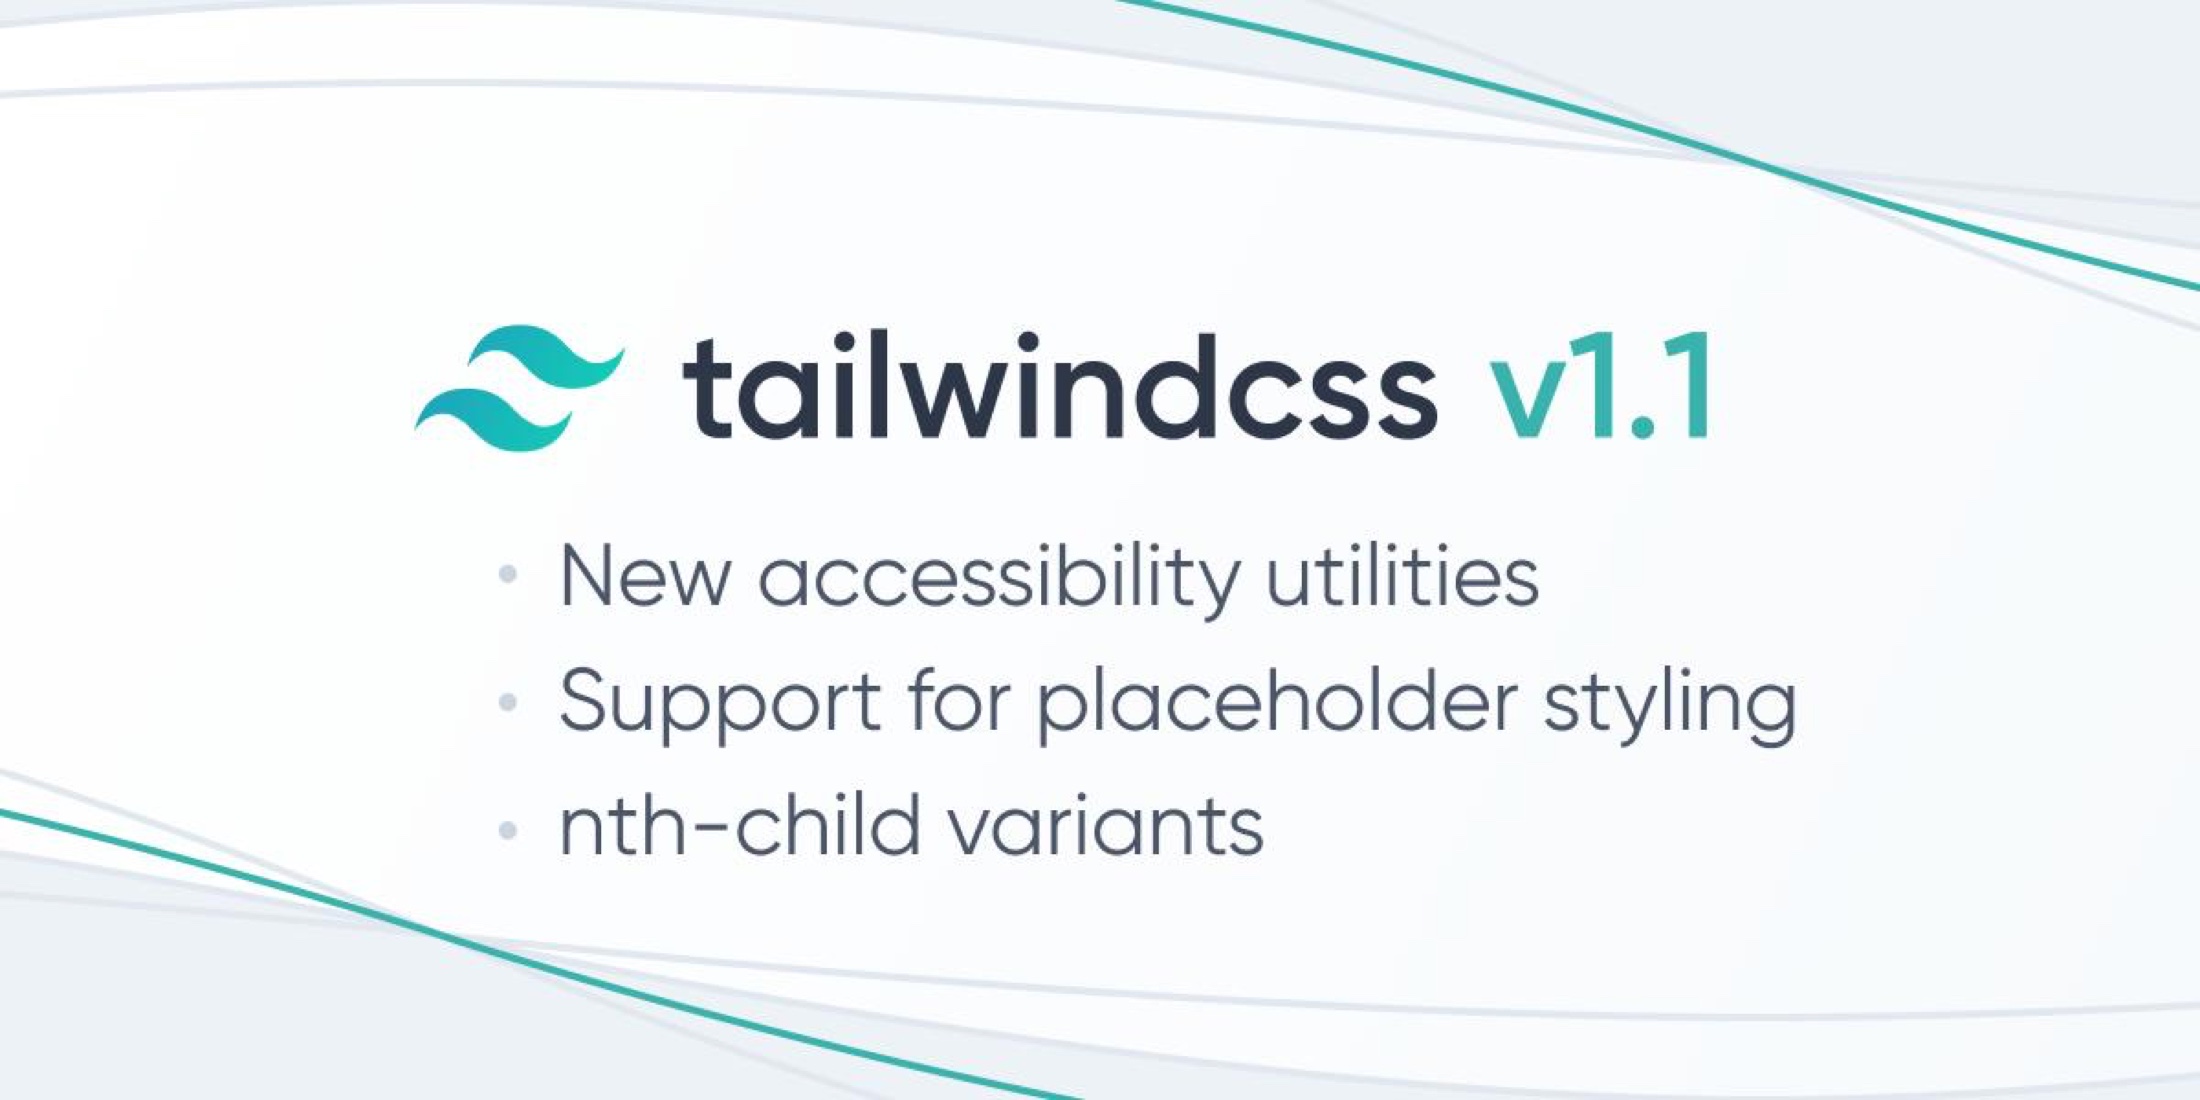 Tailwind v1.1 image